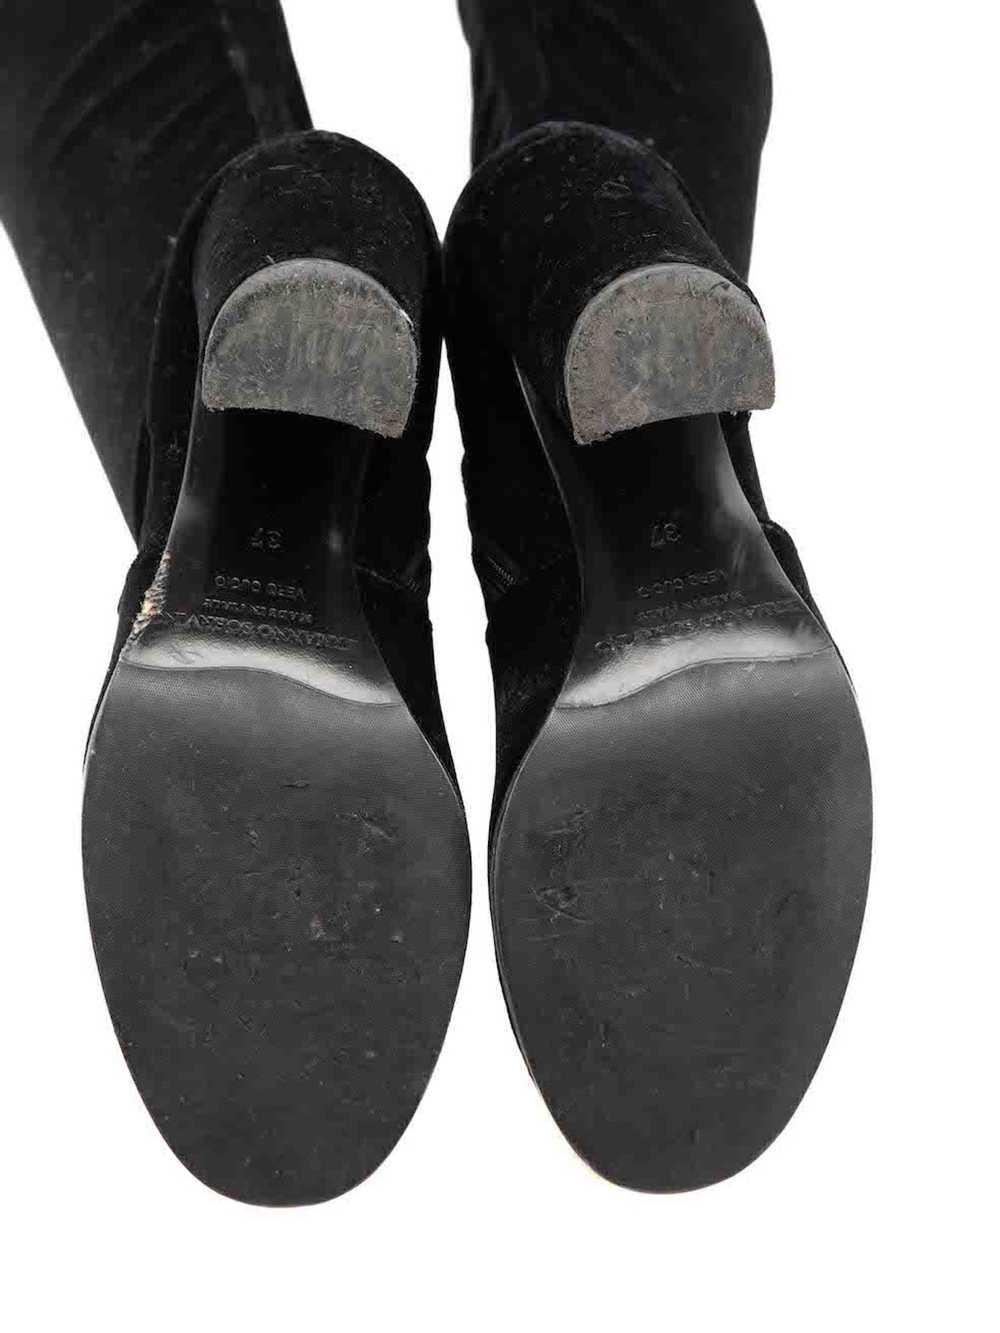 Ermanno Scervino Black Velvet Thigh High Boots - image 4